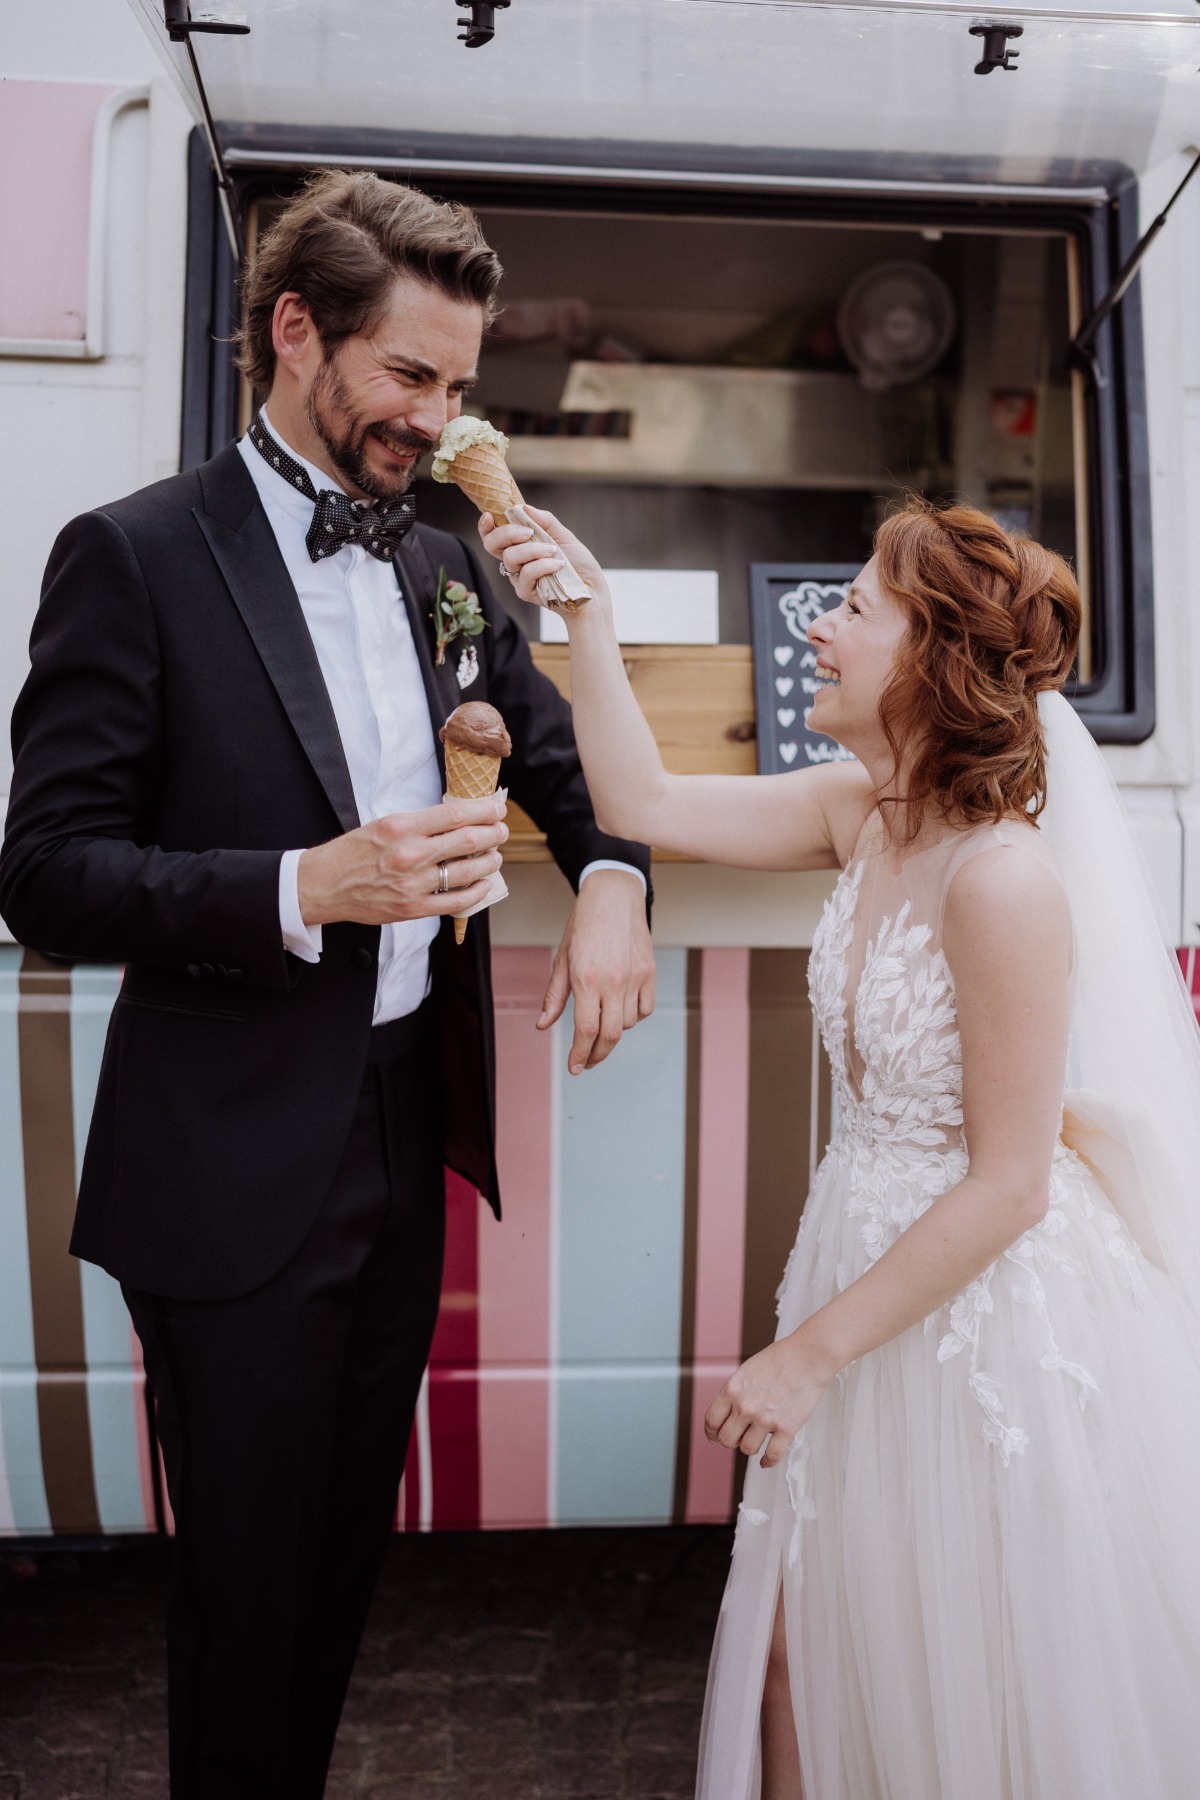 ice cream truck at wedding